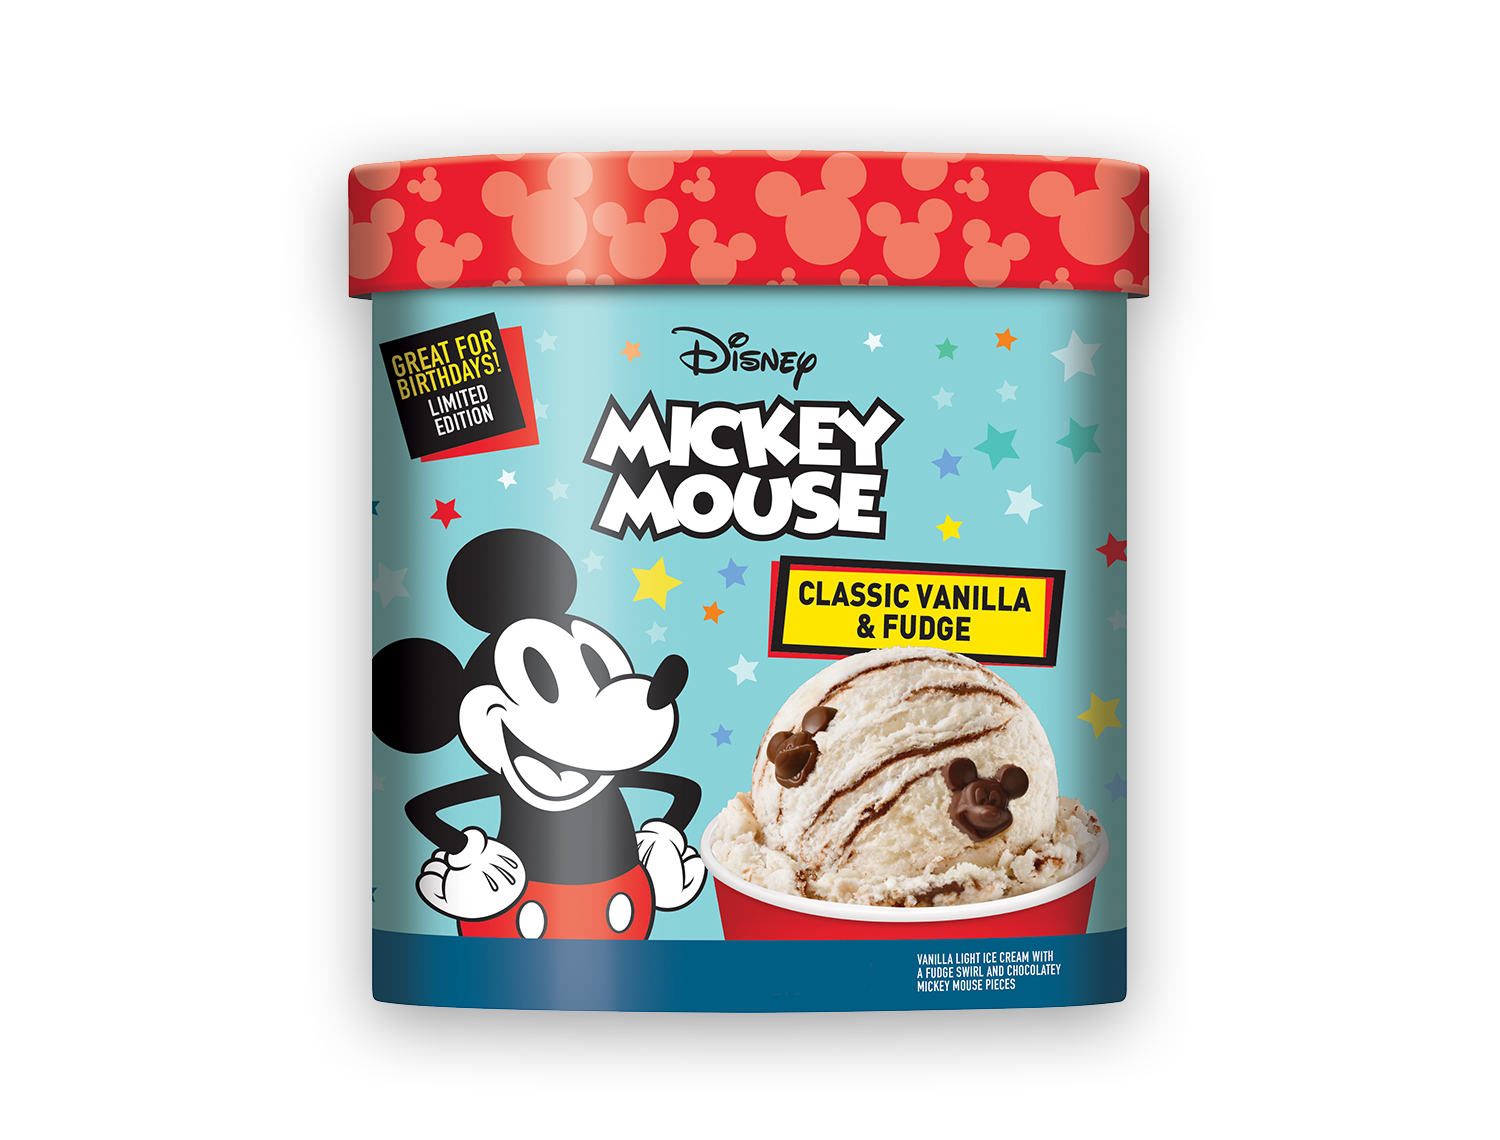 Carton of Disney Mickey mouse classic vanilla & fudge ice cream